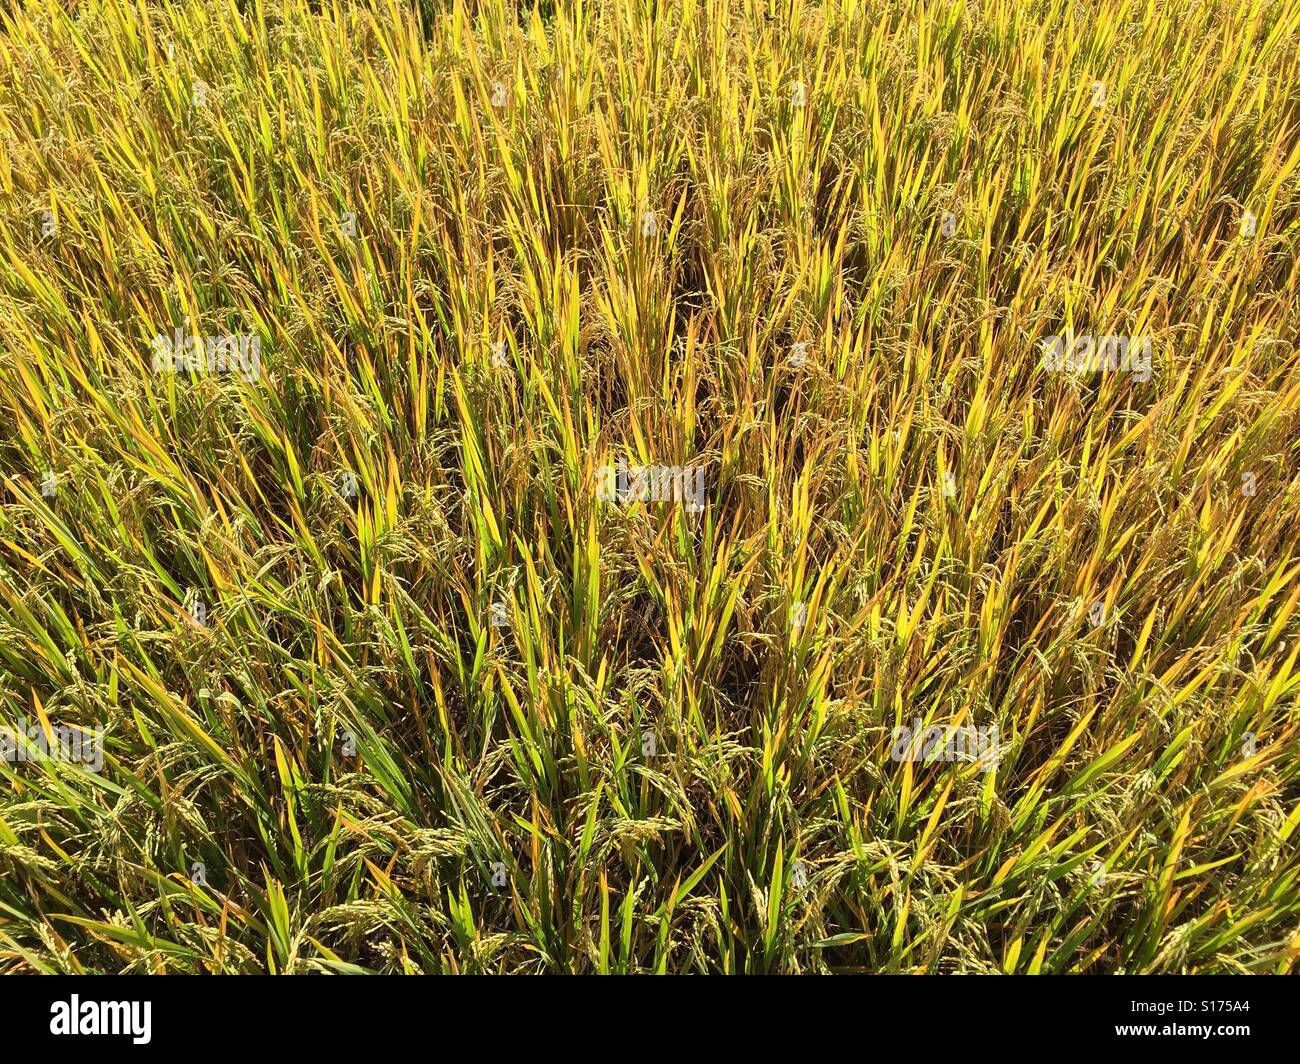 Golden rice fields Stock Photo